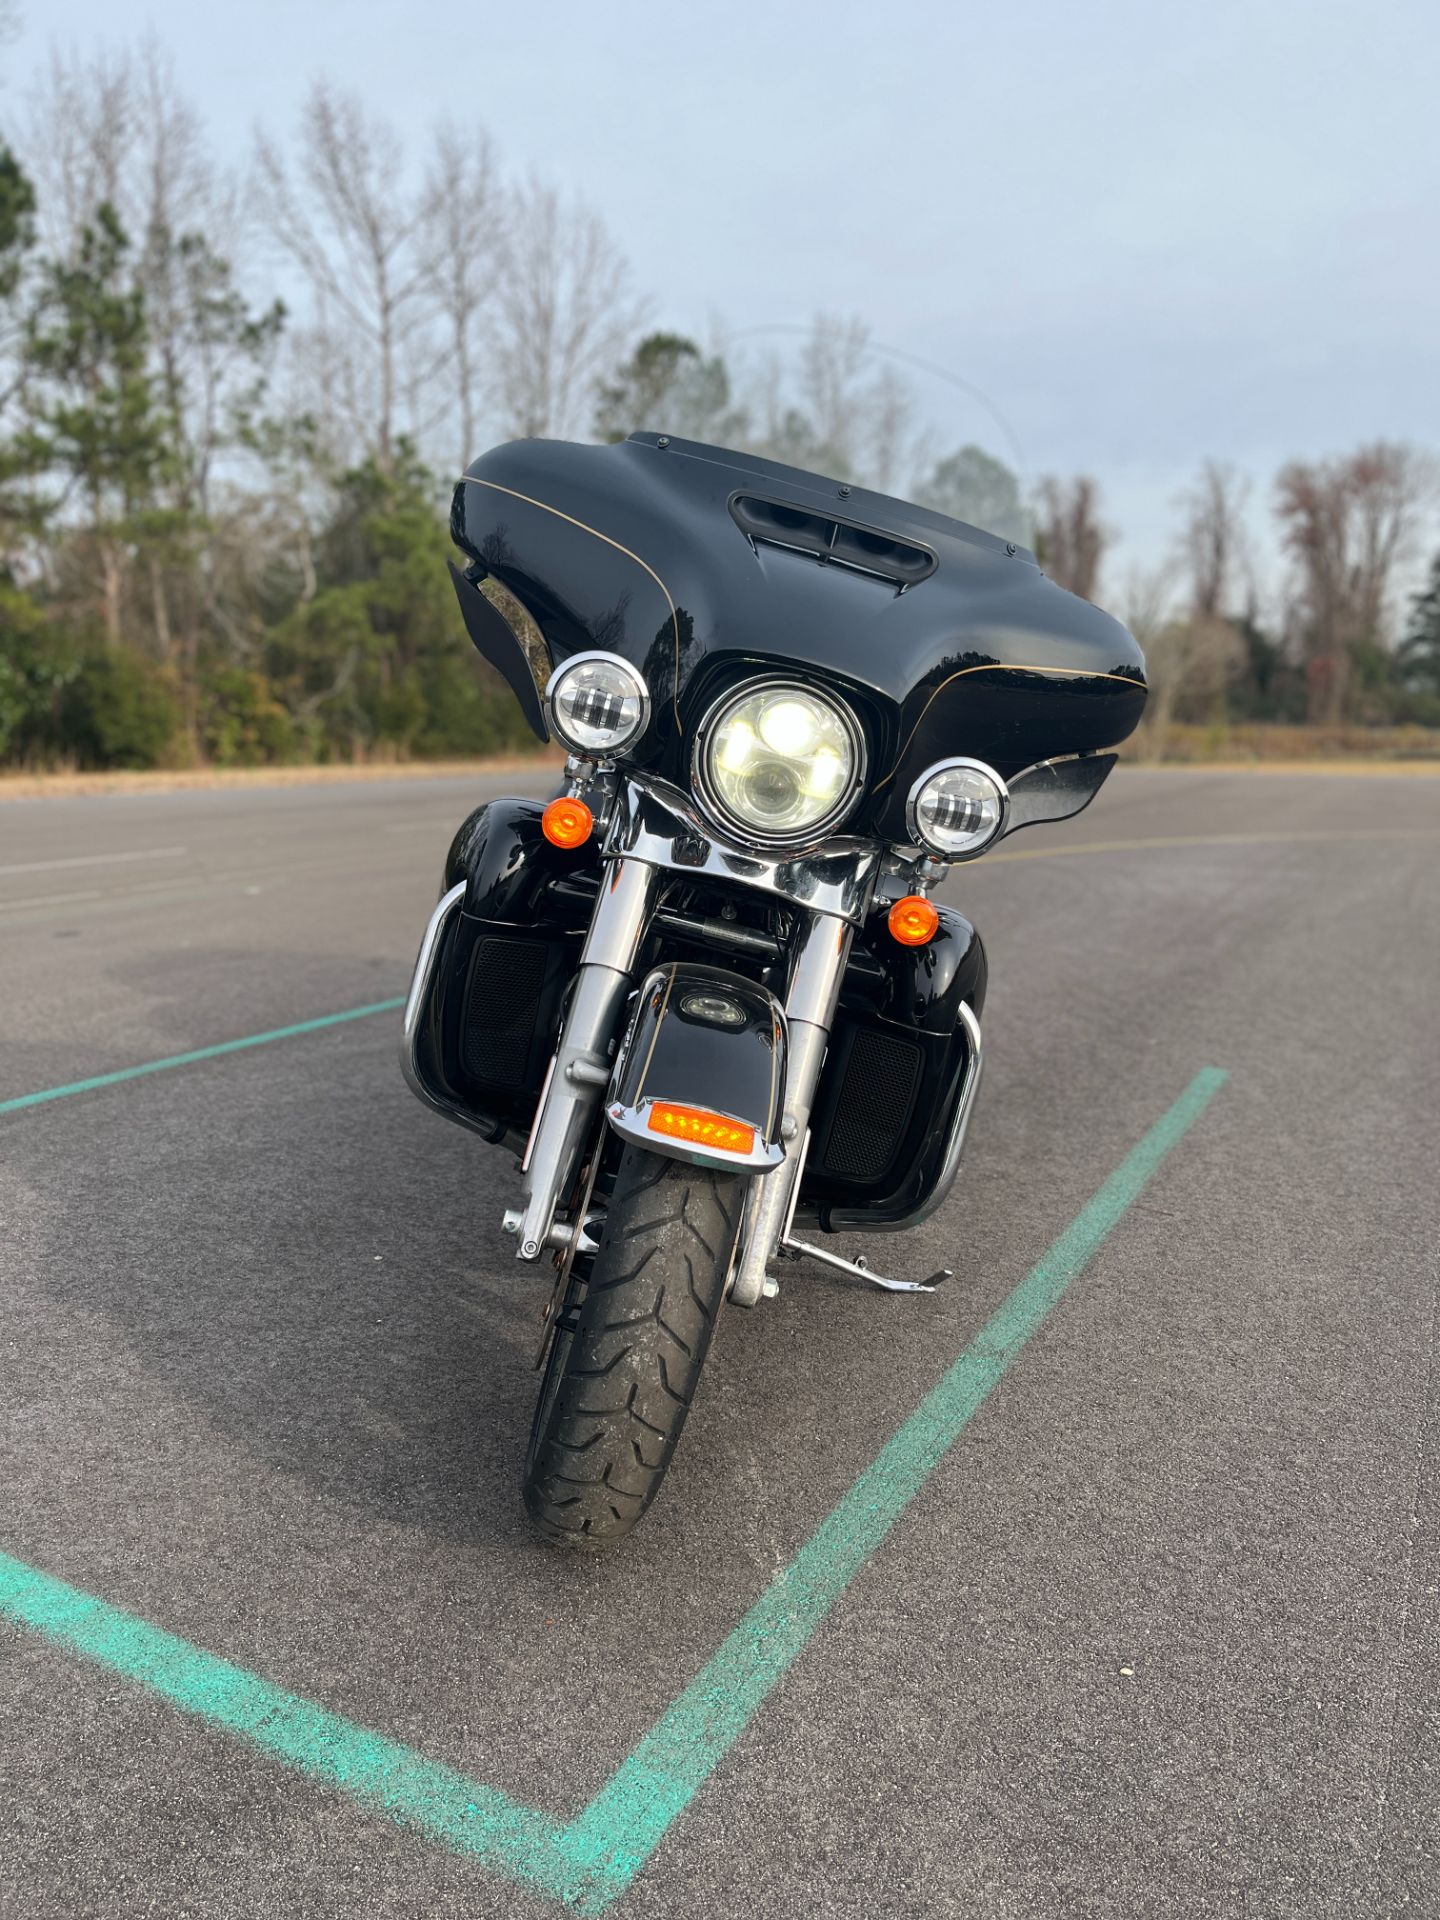 2019 Harley-Davidson ELECTRA GLIDE® ULTRA LIMITED in Jacksonville, North Carolina - Photo 5